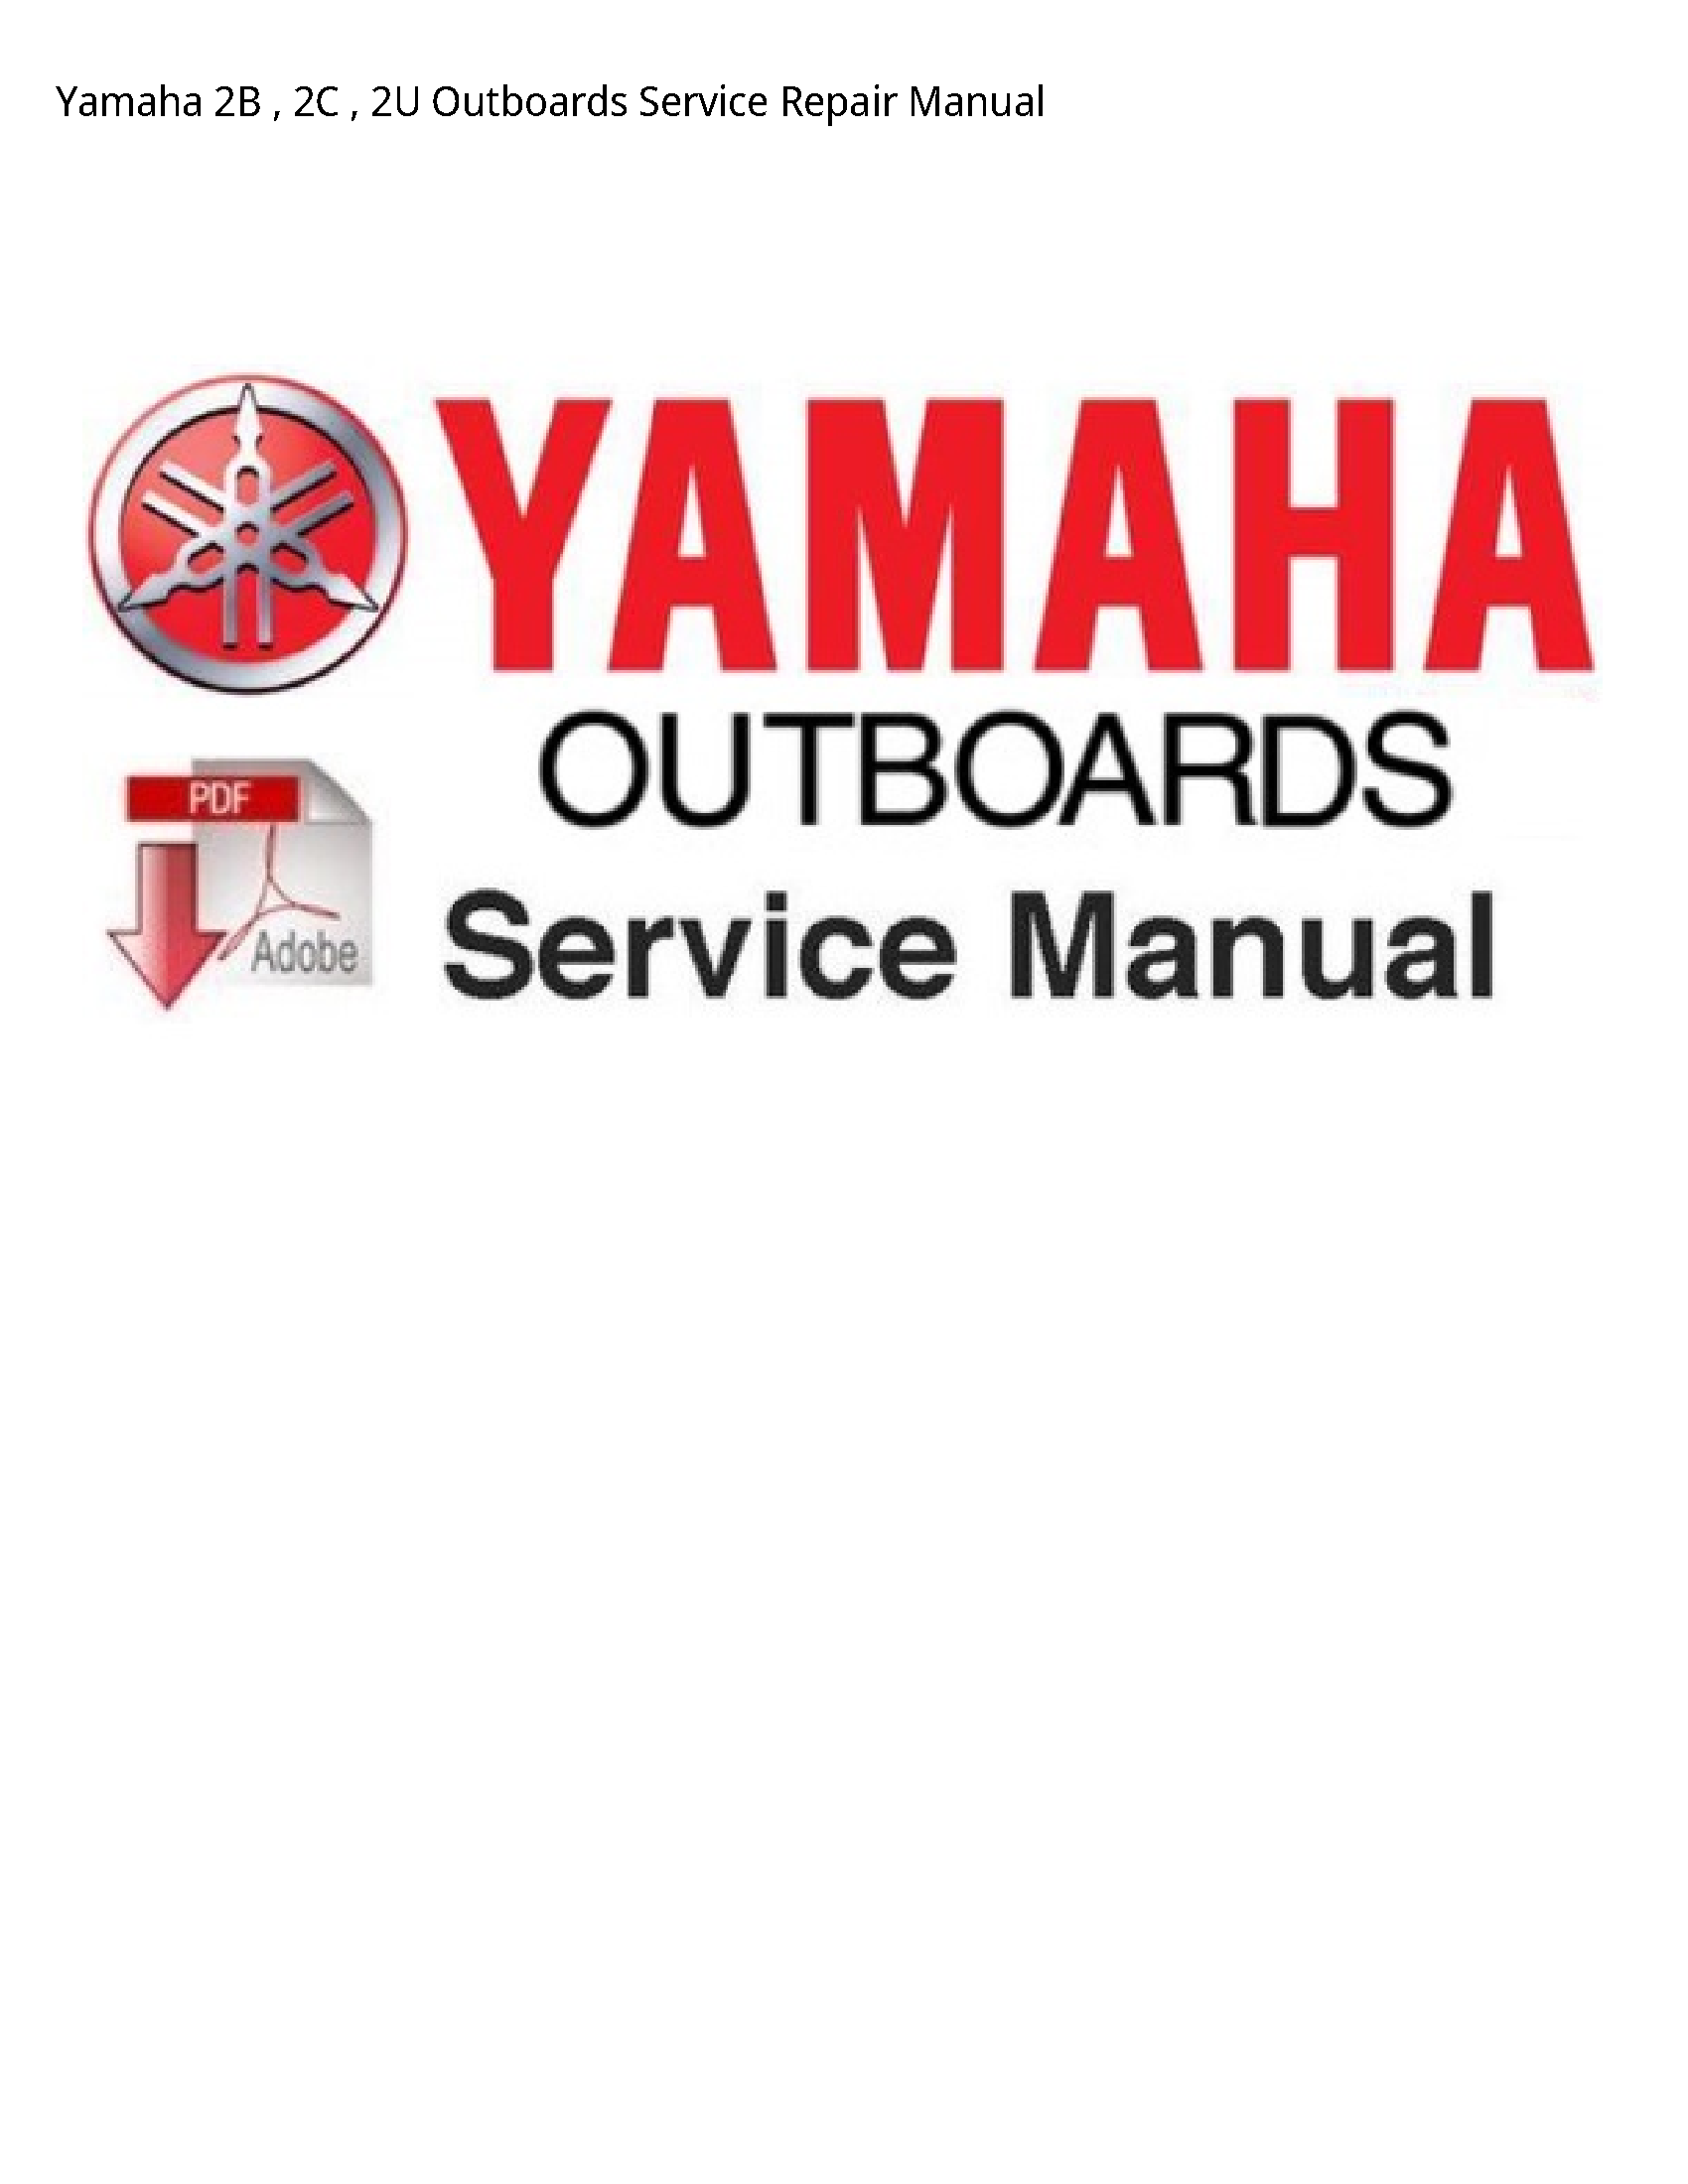 Yamaha 2B Outboards manual